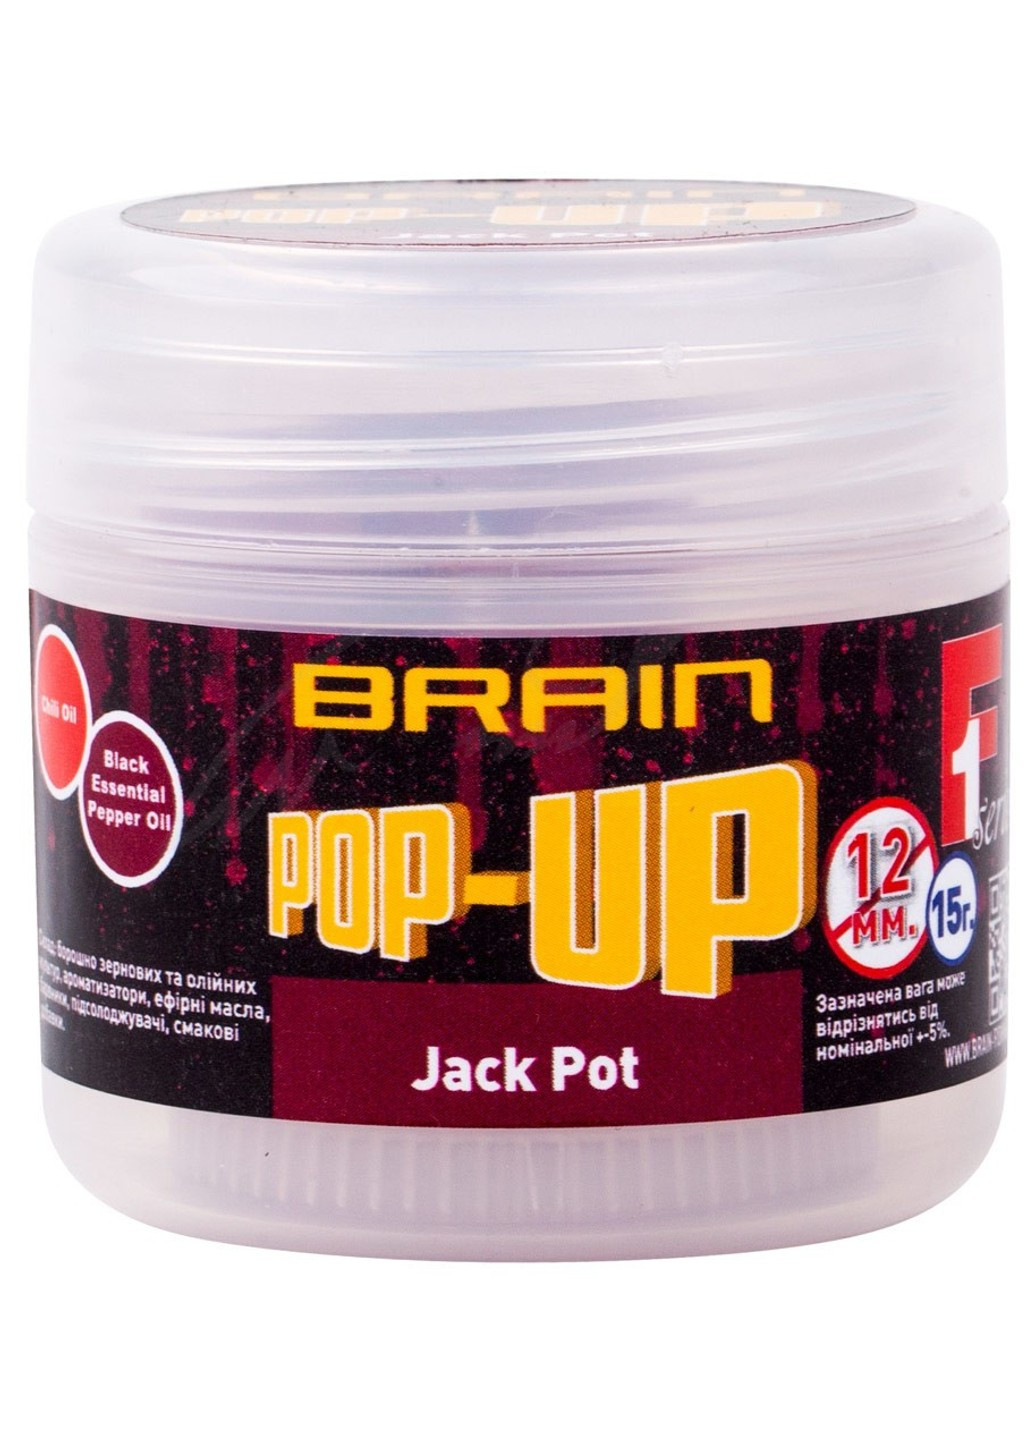 Бойли Pop-Up F1 Jack Pot (копчена ковбаса) 12mm 15g Brain (252648497)